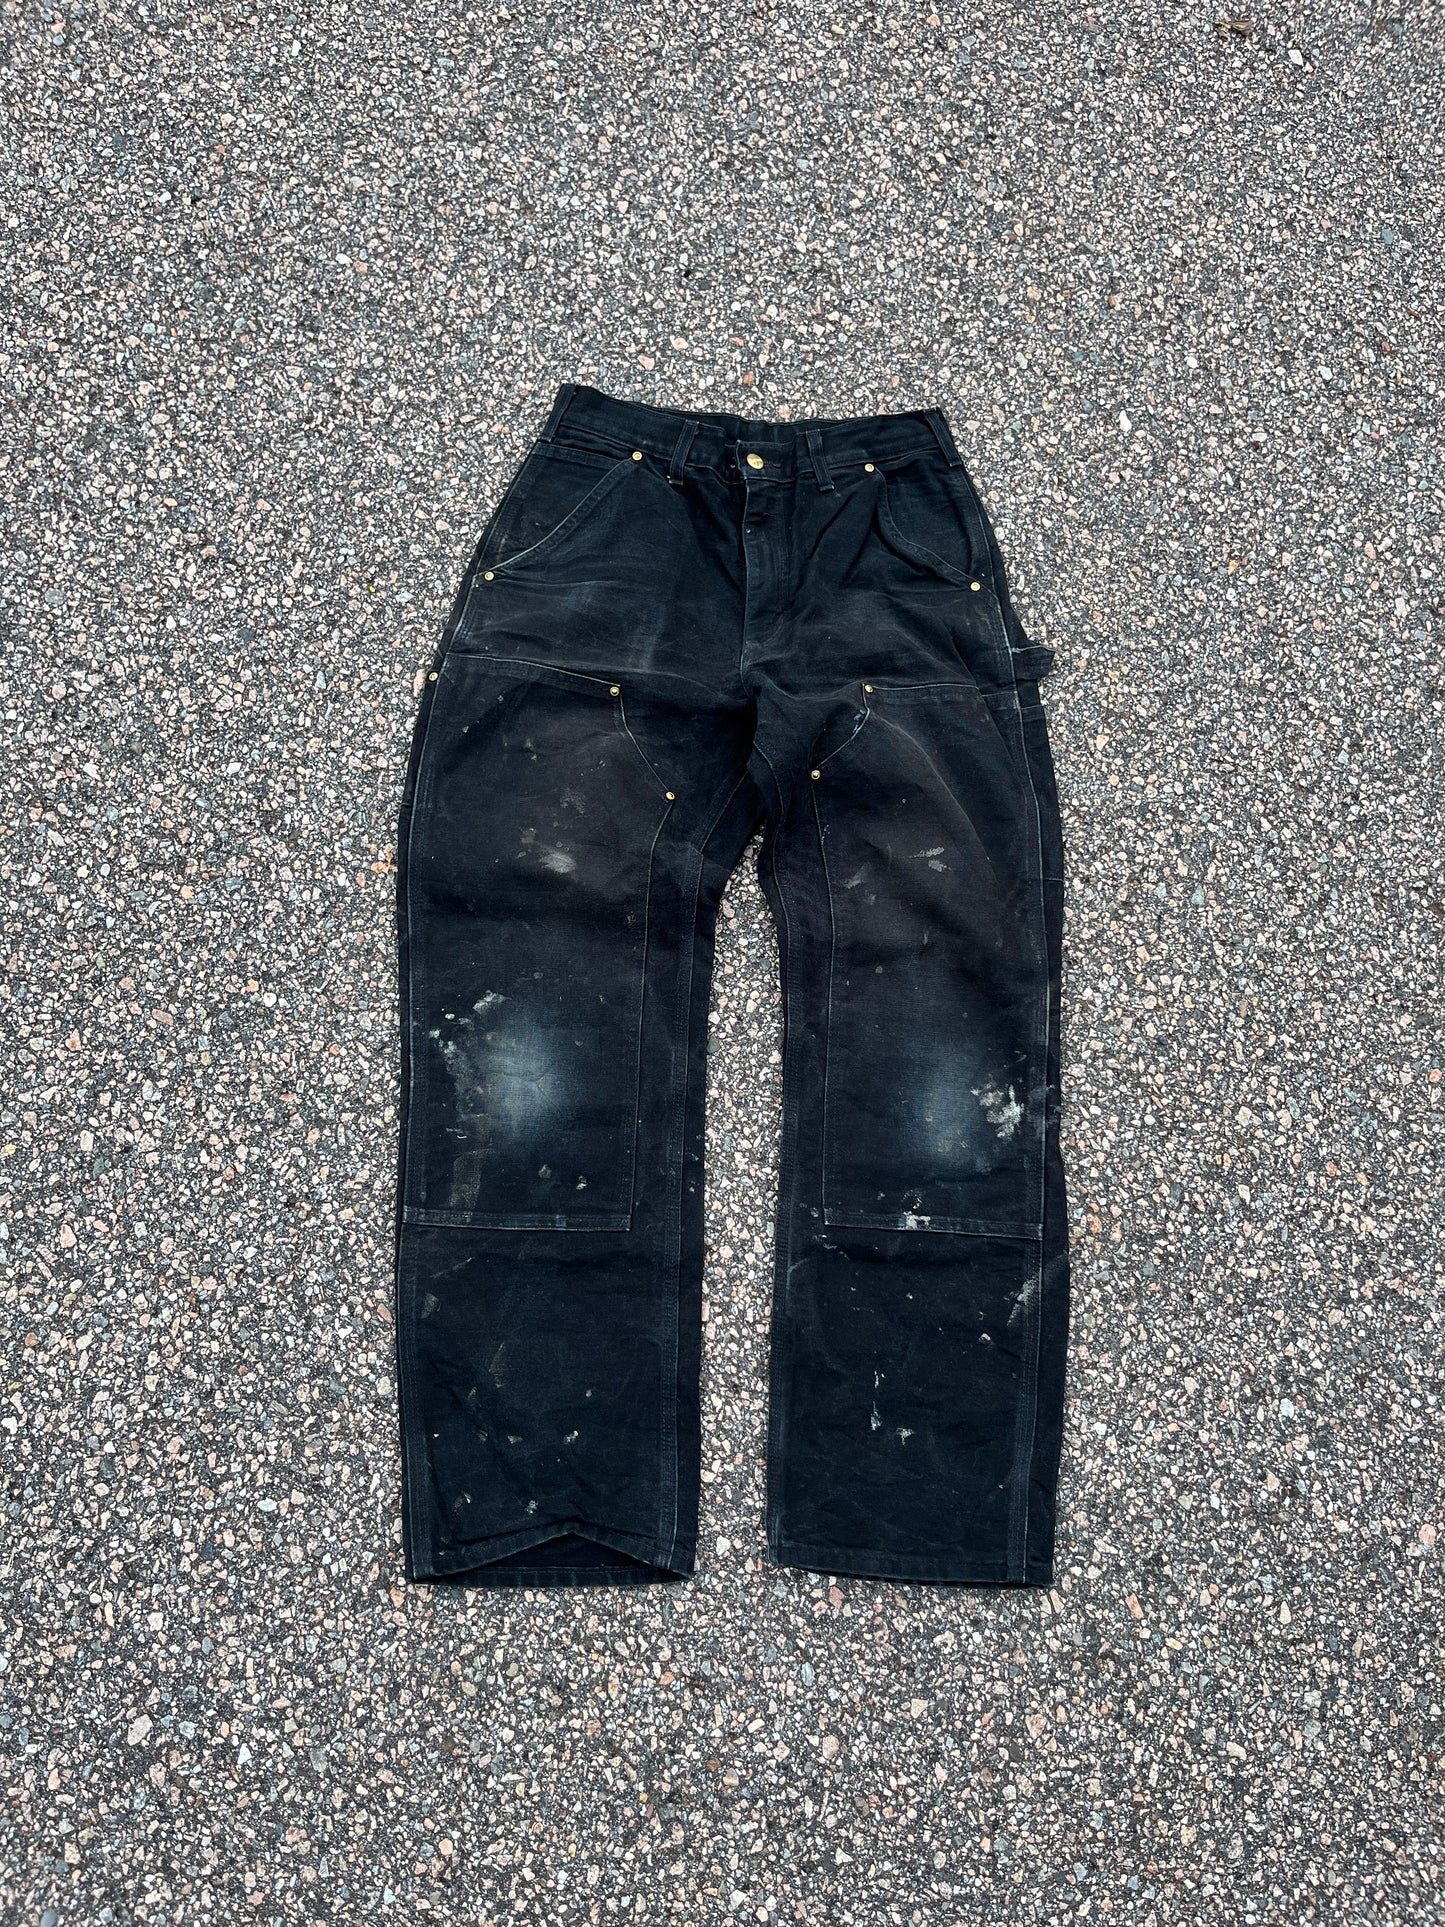 Faded n Painted Black Carhartt Double Knee Pants - 29 x 30